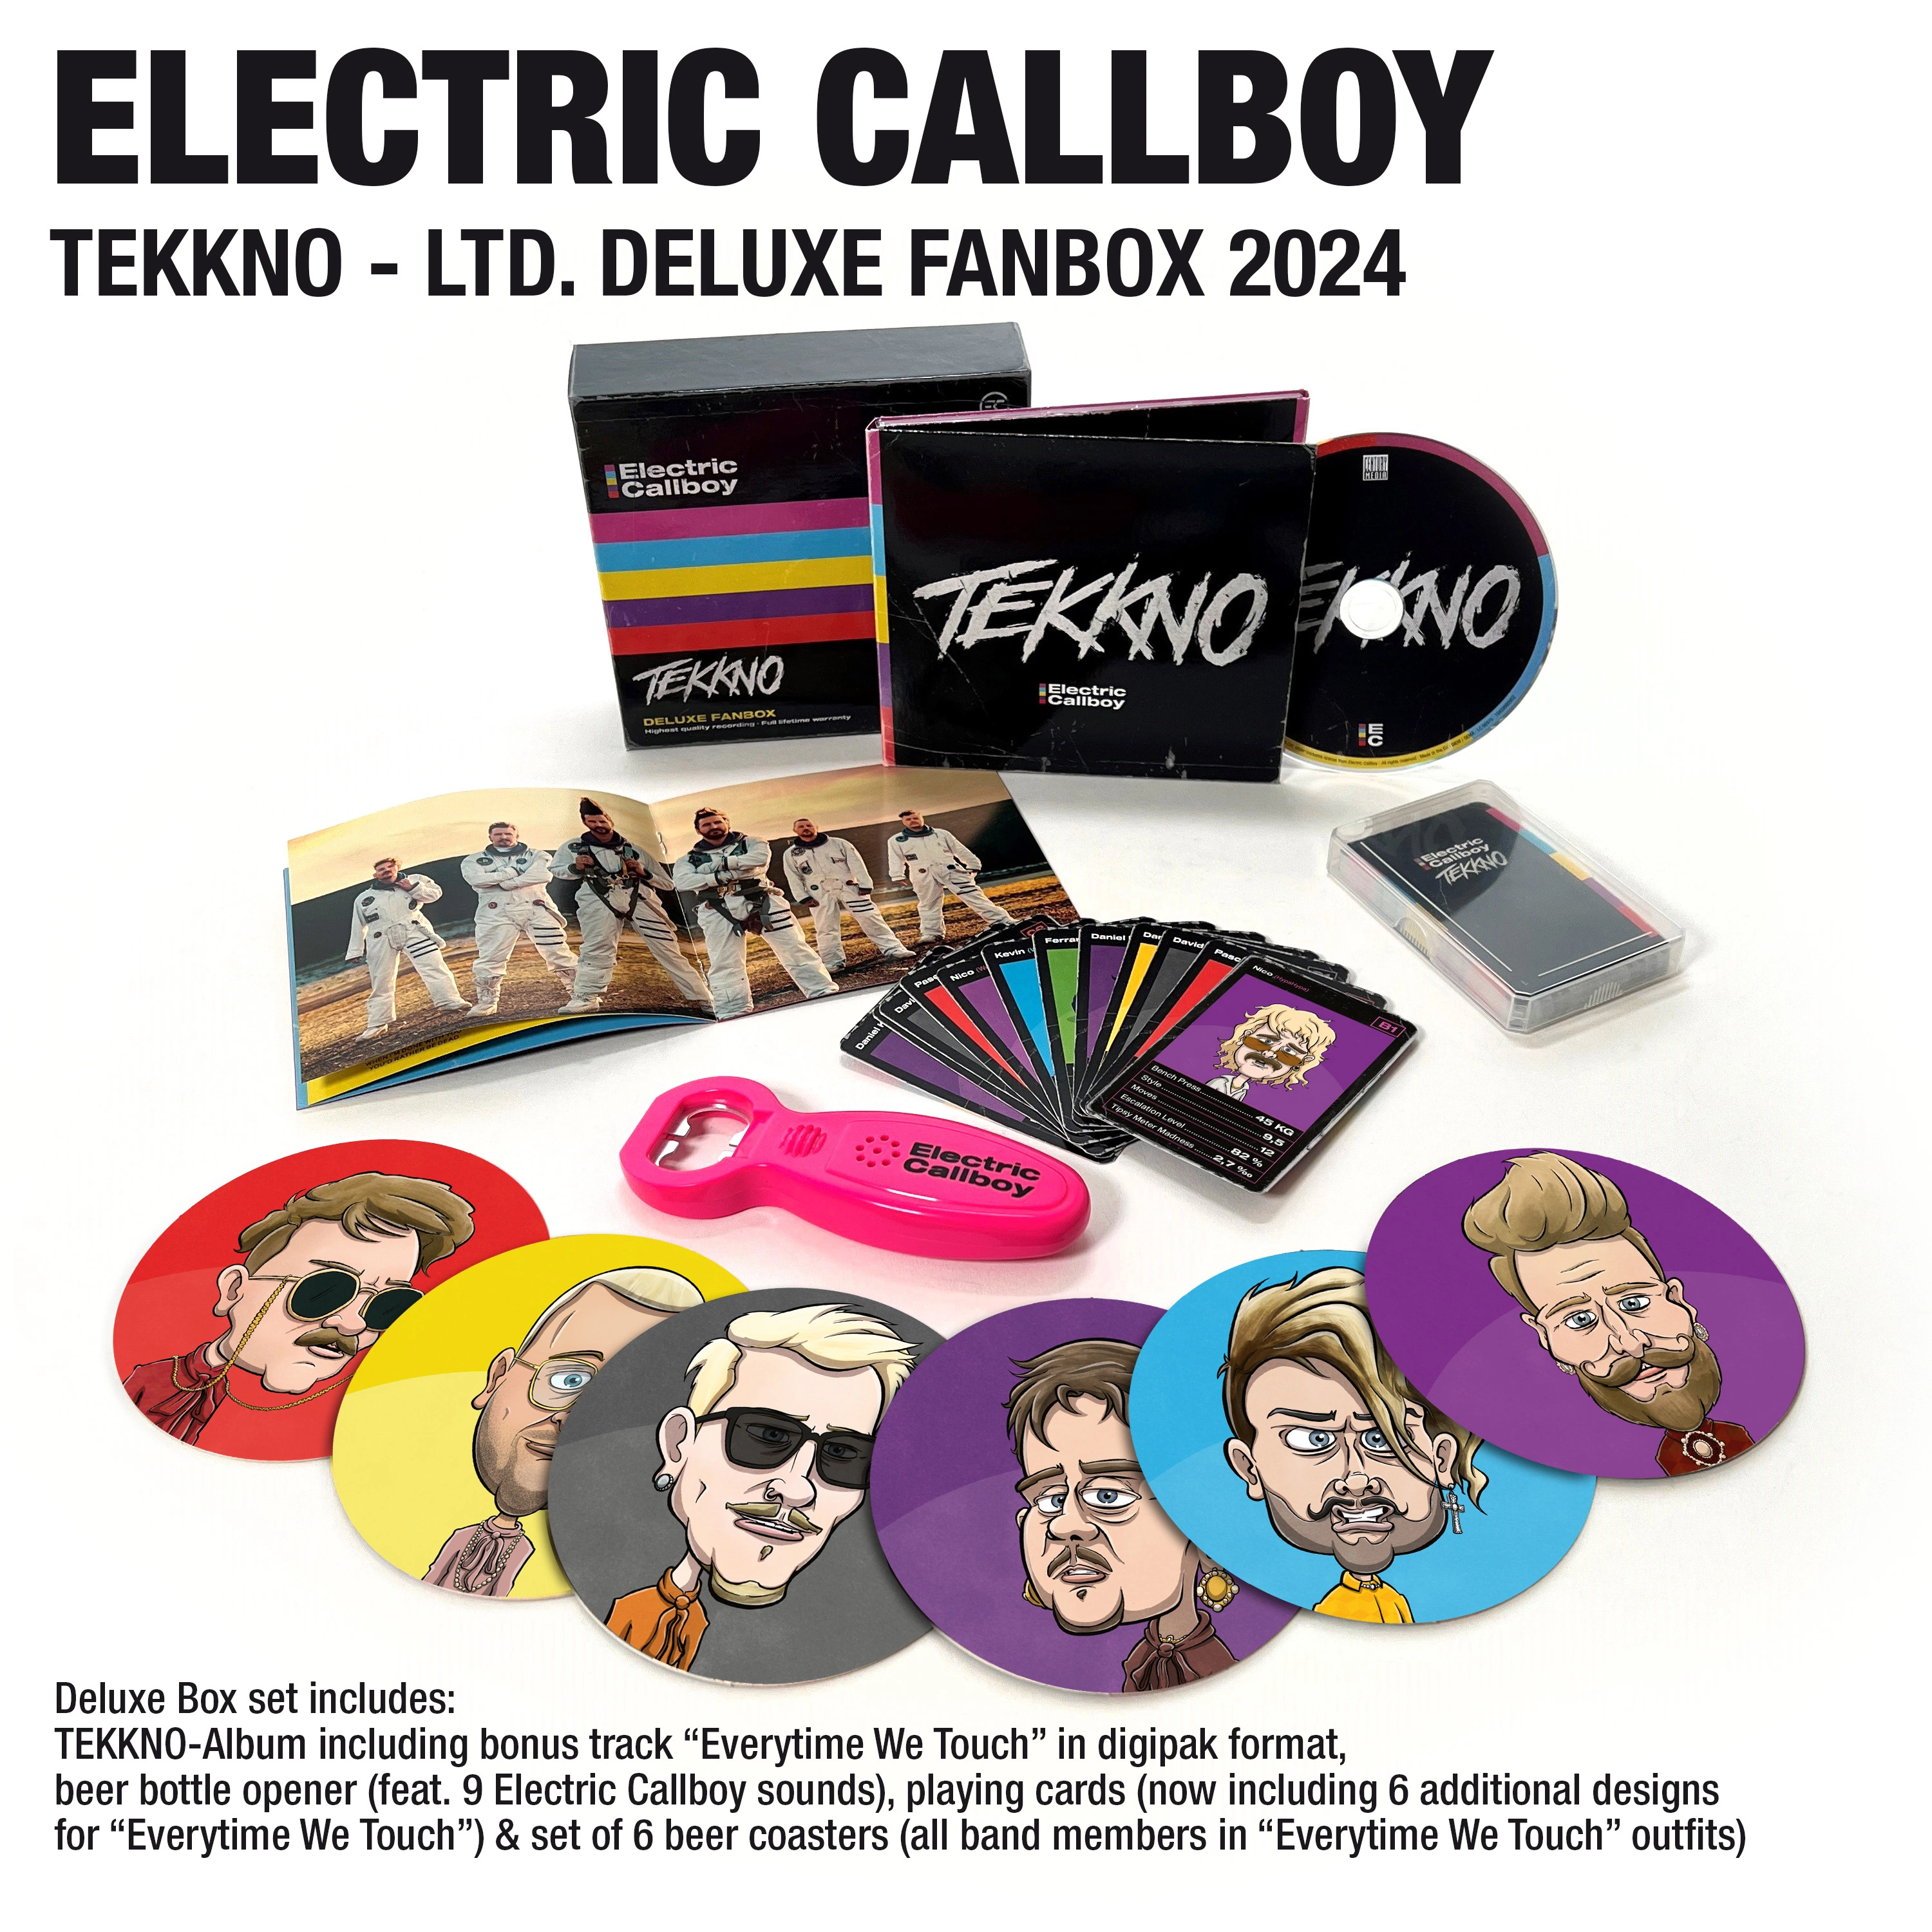 ELECTRIC CALLBOY - Tekkno (Fanbox 2024) [BOXCD]